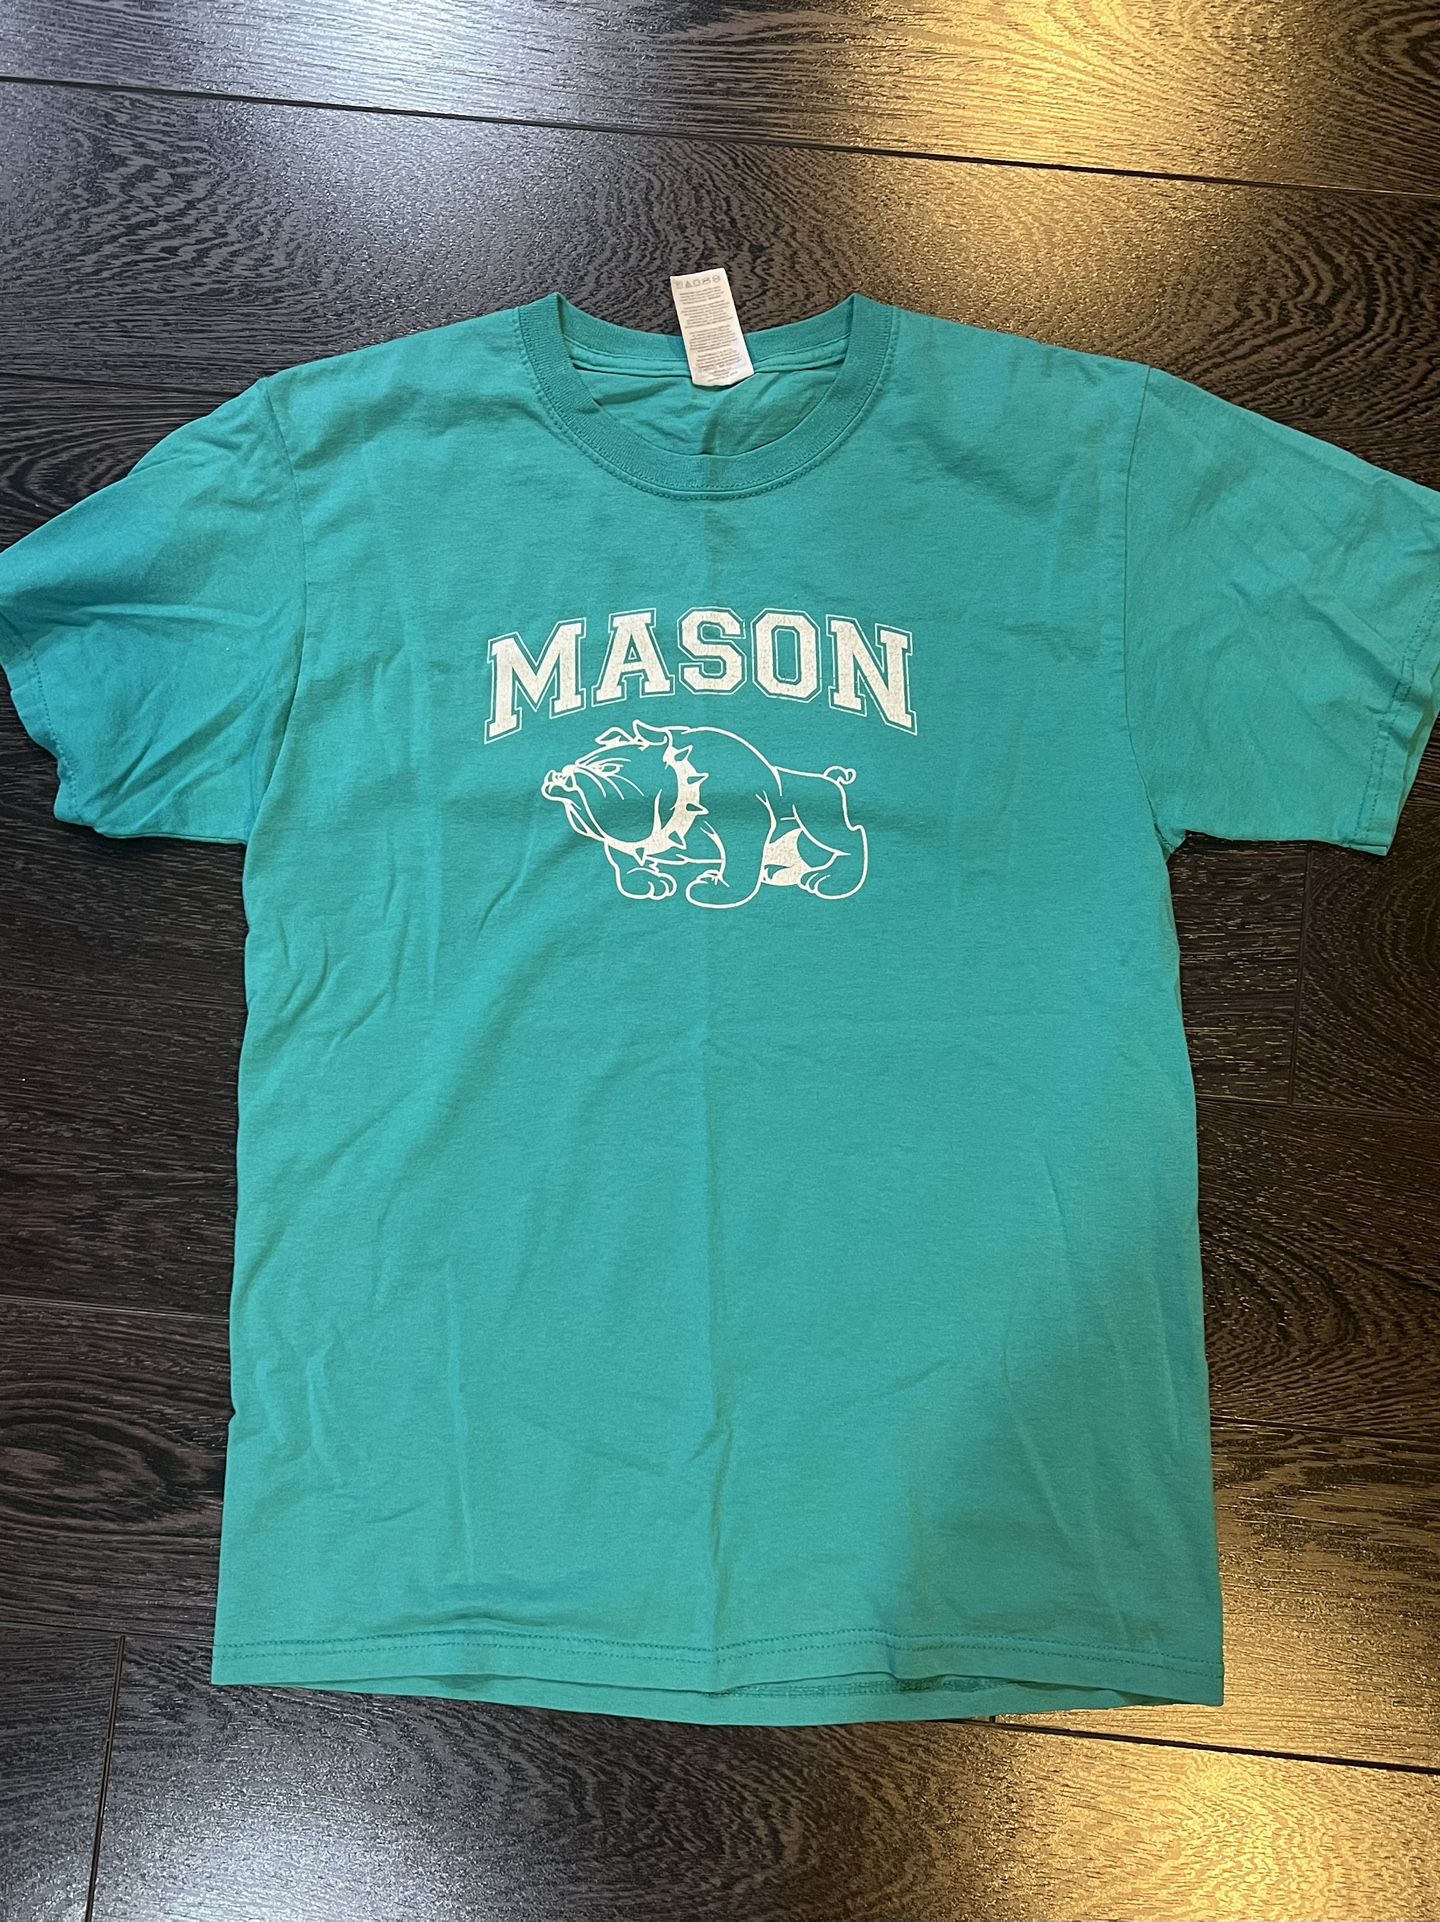 Mason High school Bulldogs Medium Youth Teal T shirt top shirt sleeve